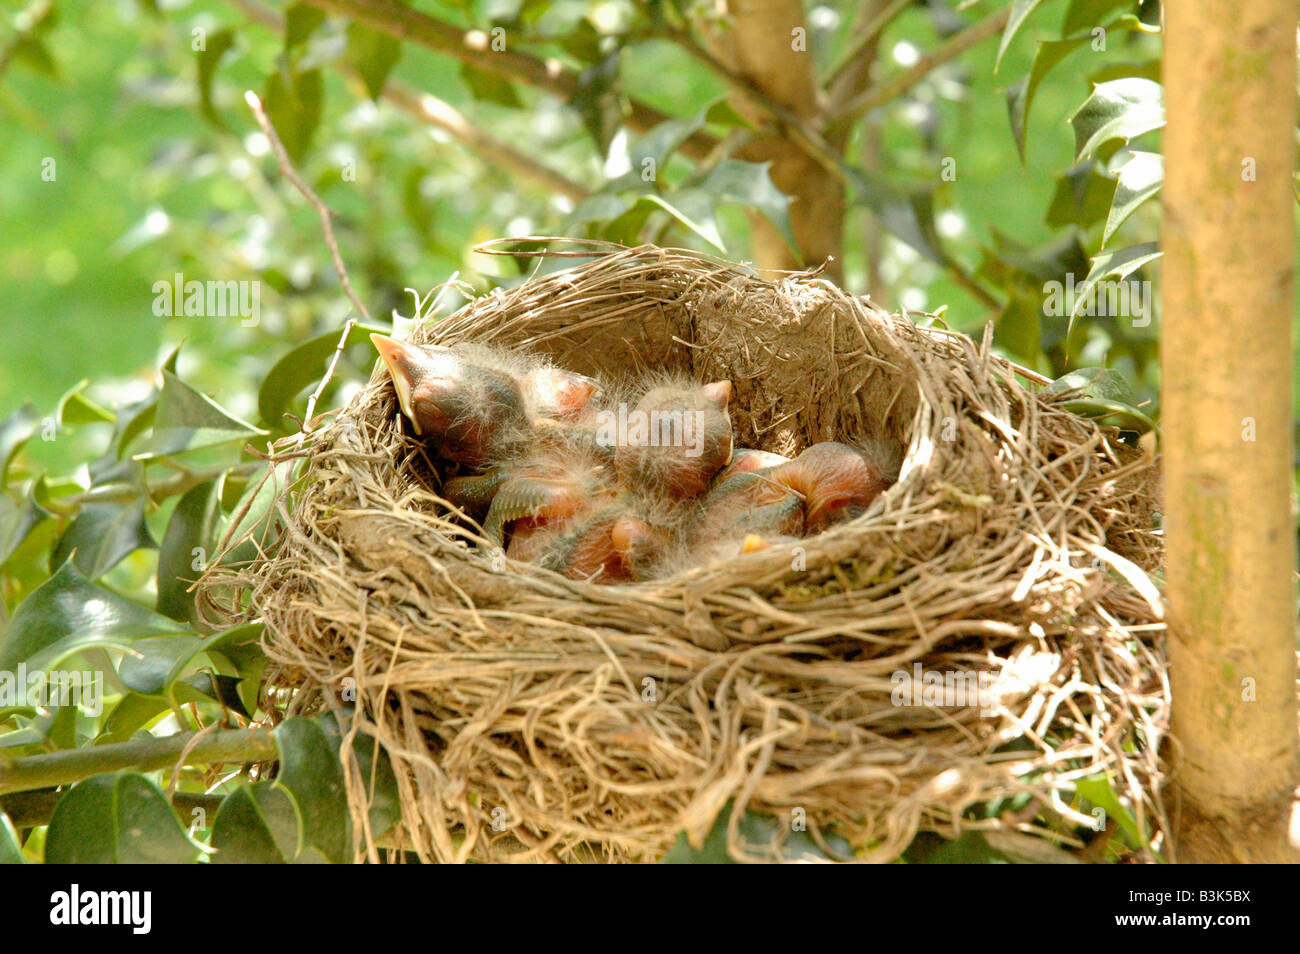 Hatchling baby birds in nest Stock Photo